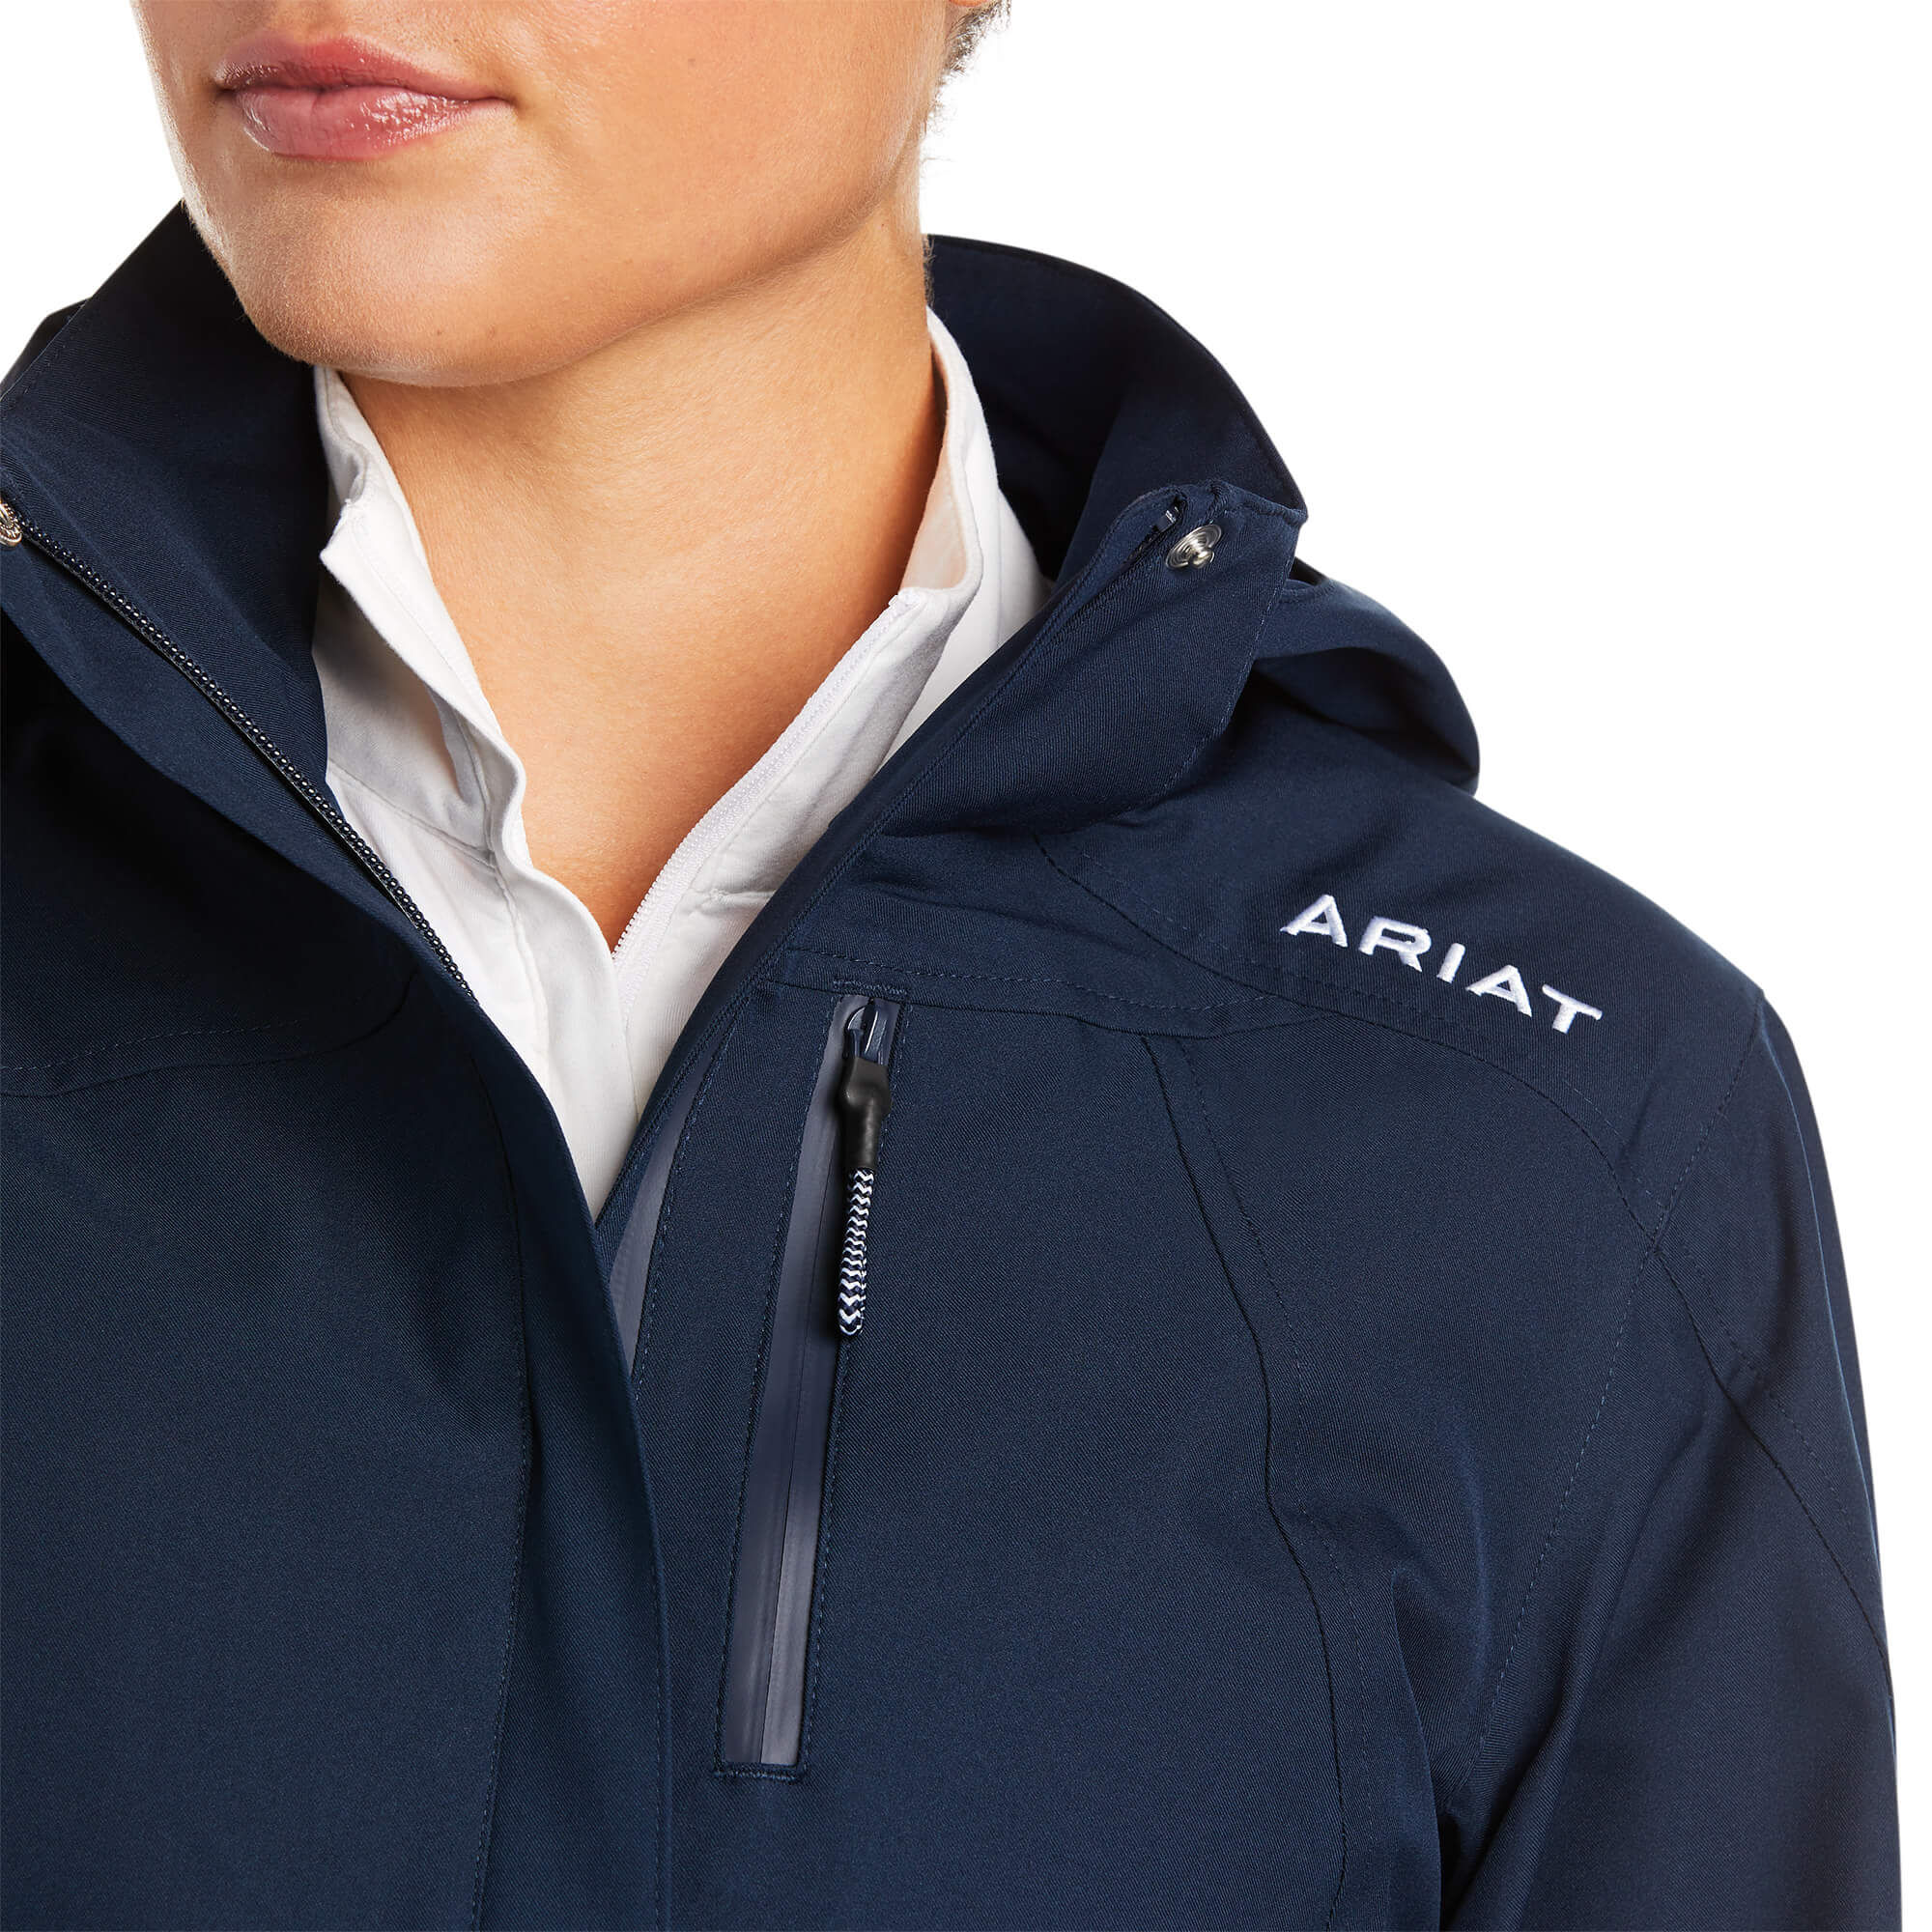 Breathable Waterproof Sprayproof ARIAT Womens Coastal H2O Coat Jacket Navy Water dares try to penetrate this jacket